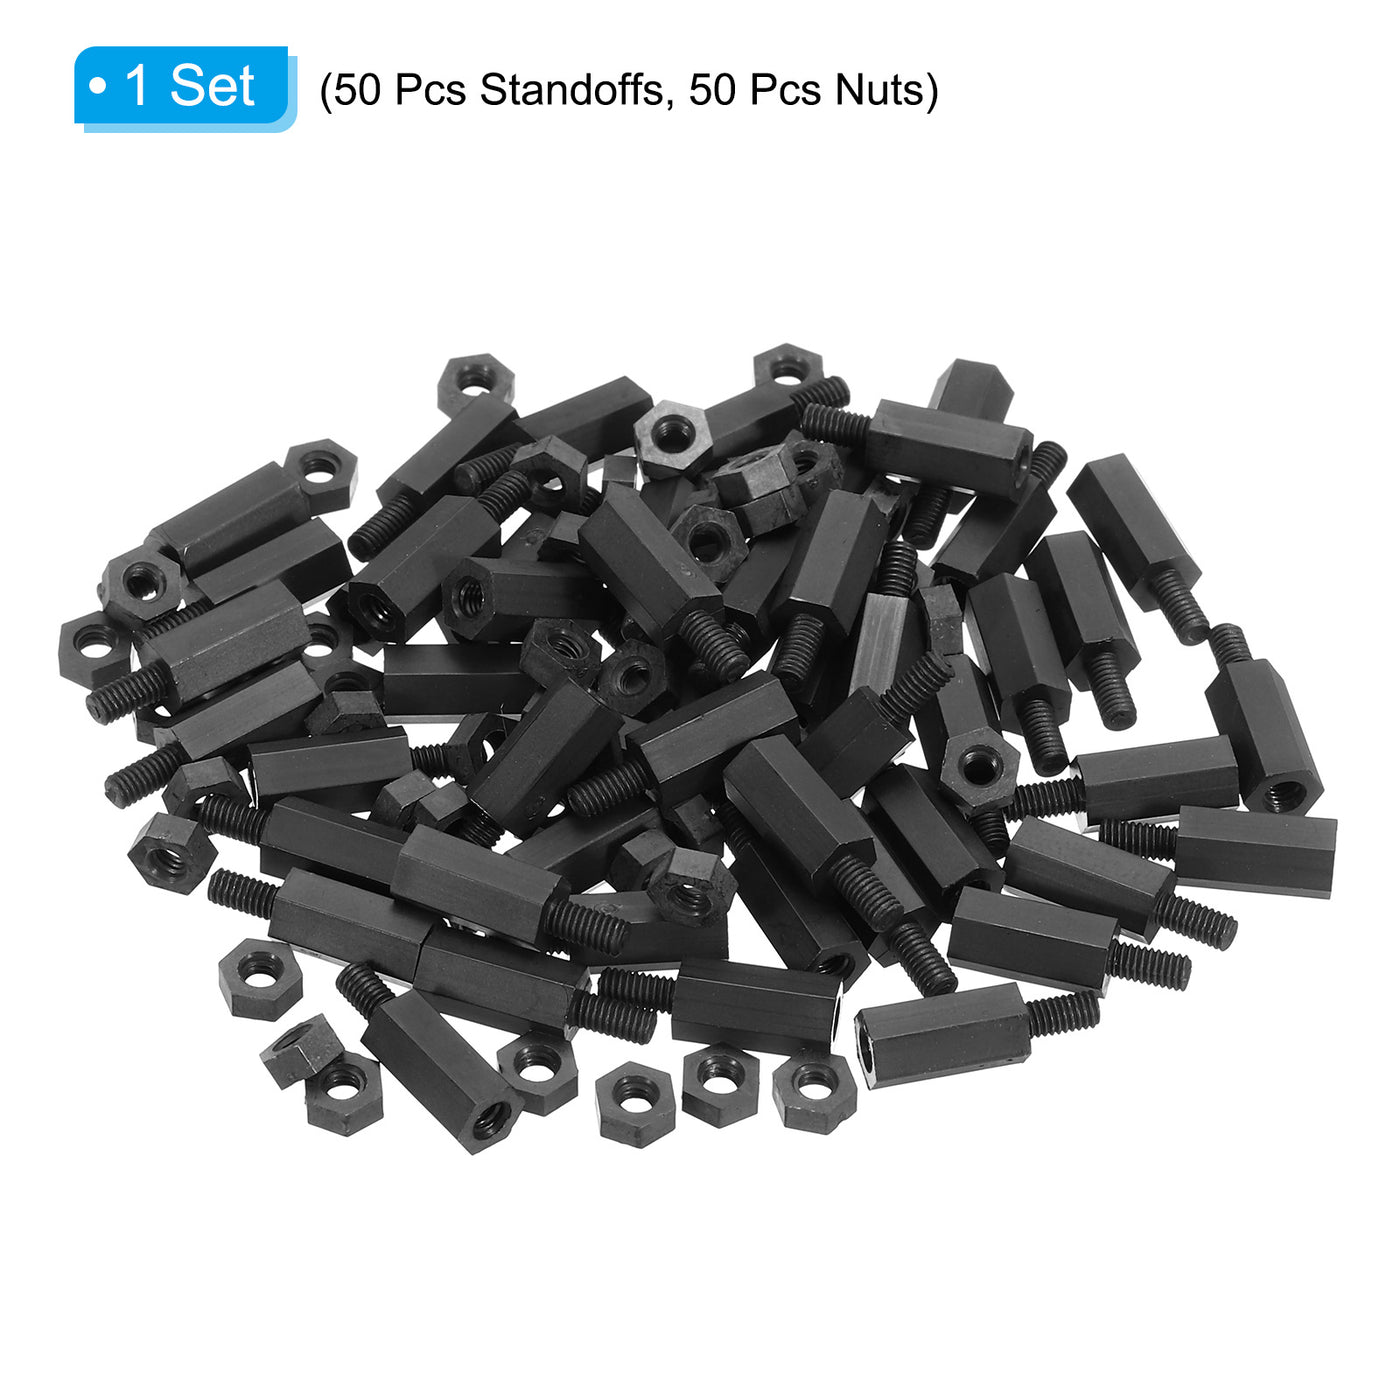 Harfington M2.5 Nylon Hex Standoff Screws Nuts, 100Pack PCB Threaded Kit(10mm+5mm, Black)